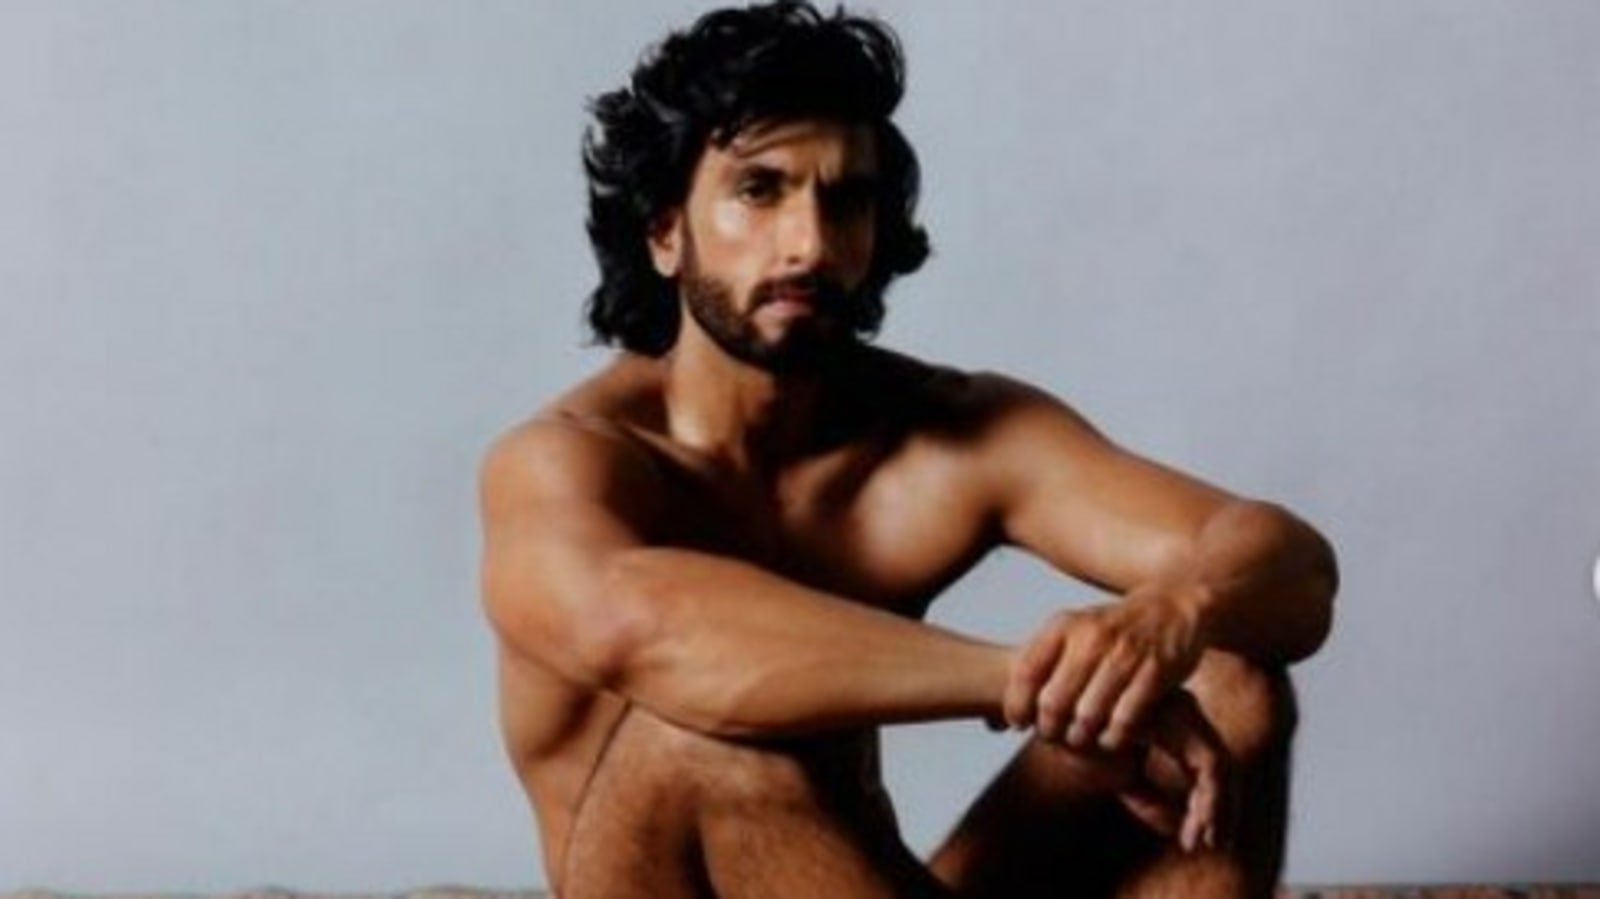 Jacqueline Nude - Masaba Gupta calls Ranveer Singh's nude shoot 'best cover shot' India has  seen | Bollywood - Hindustan Times